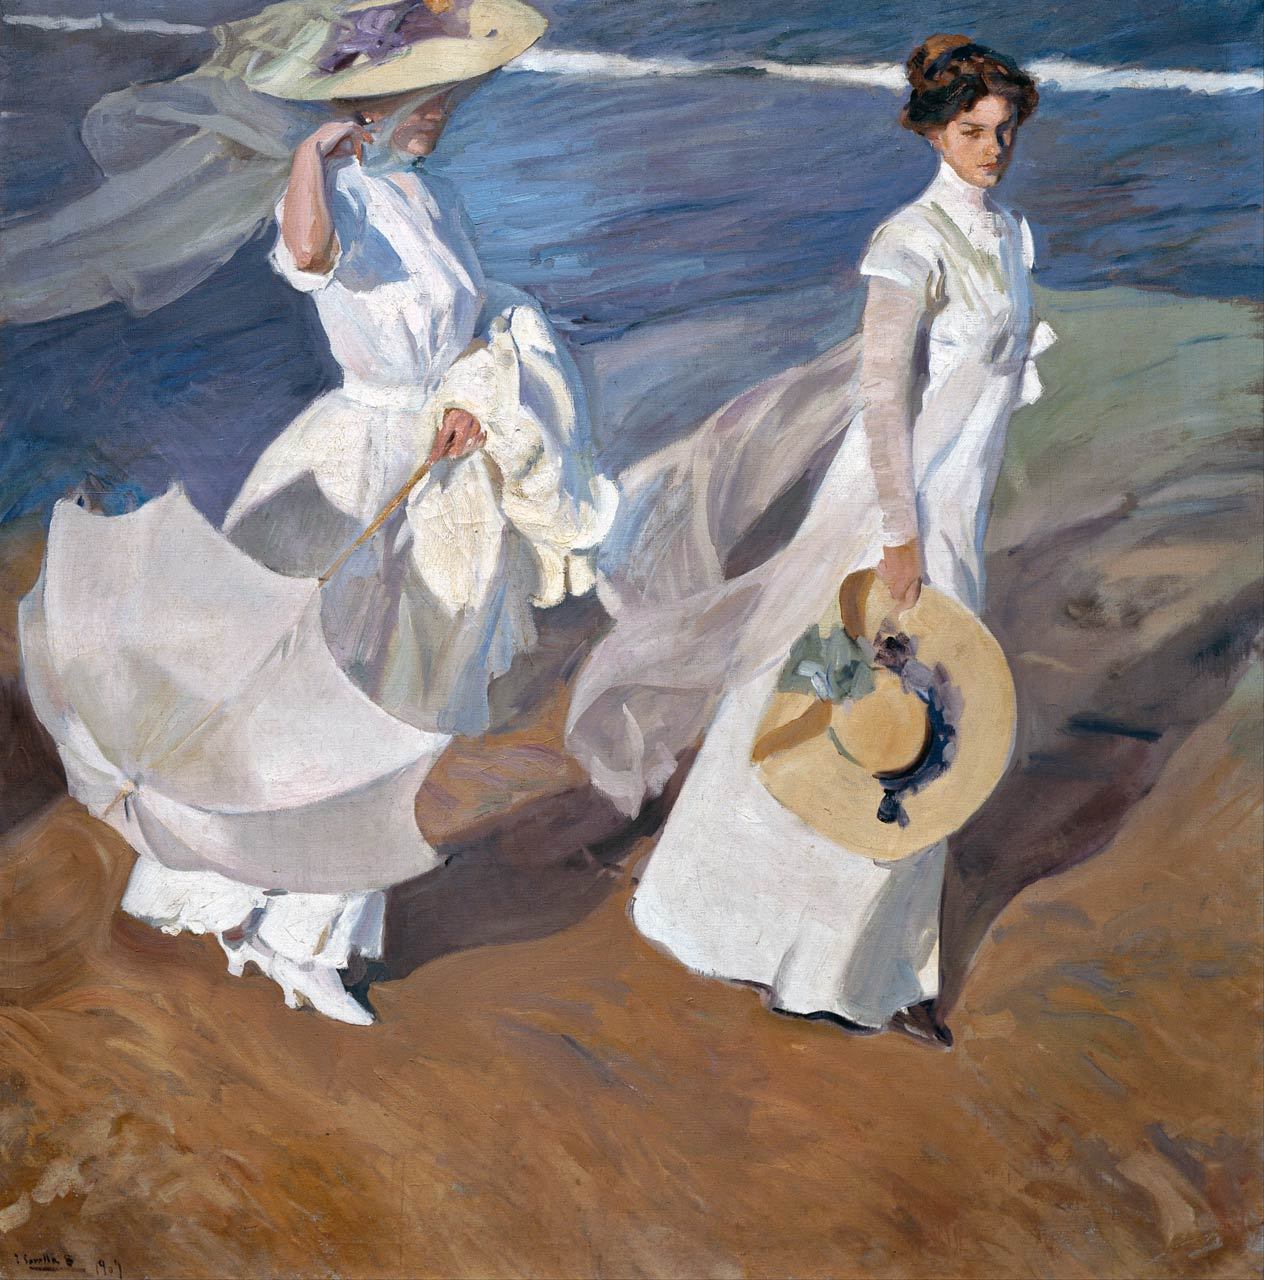 artiebagagli:
“Joaquin Sorolla - Strolling along the Seashore (1909)
”